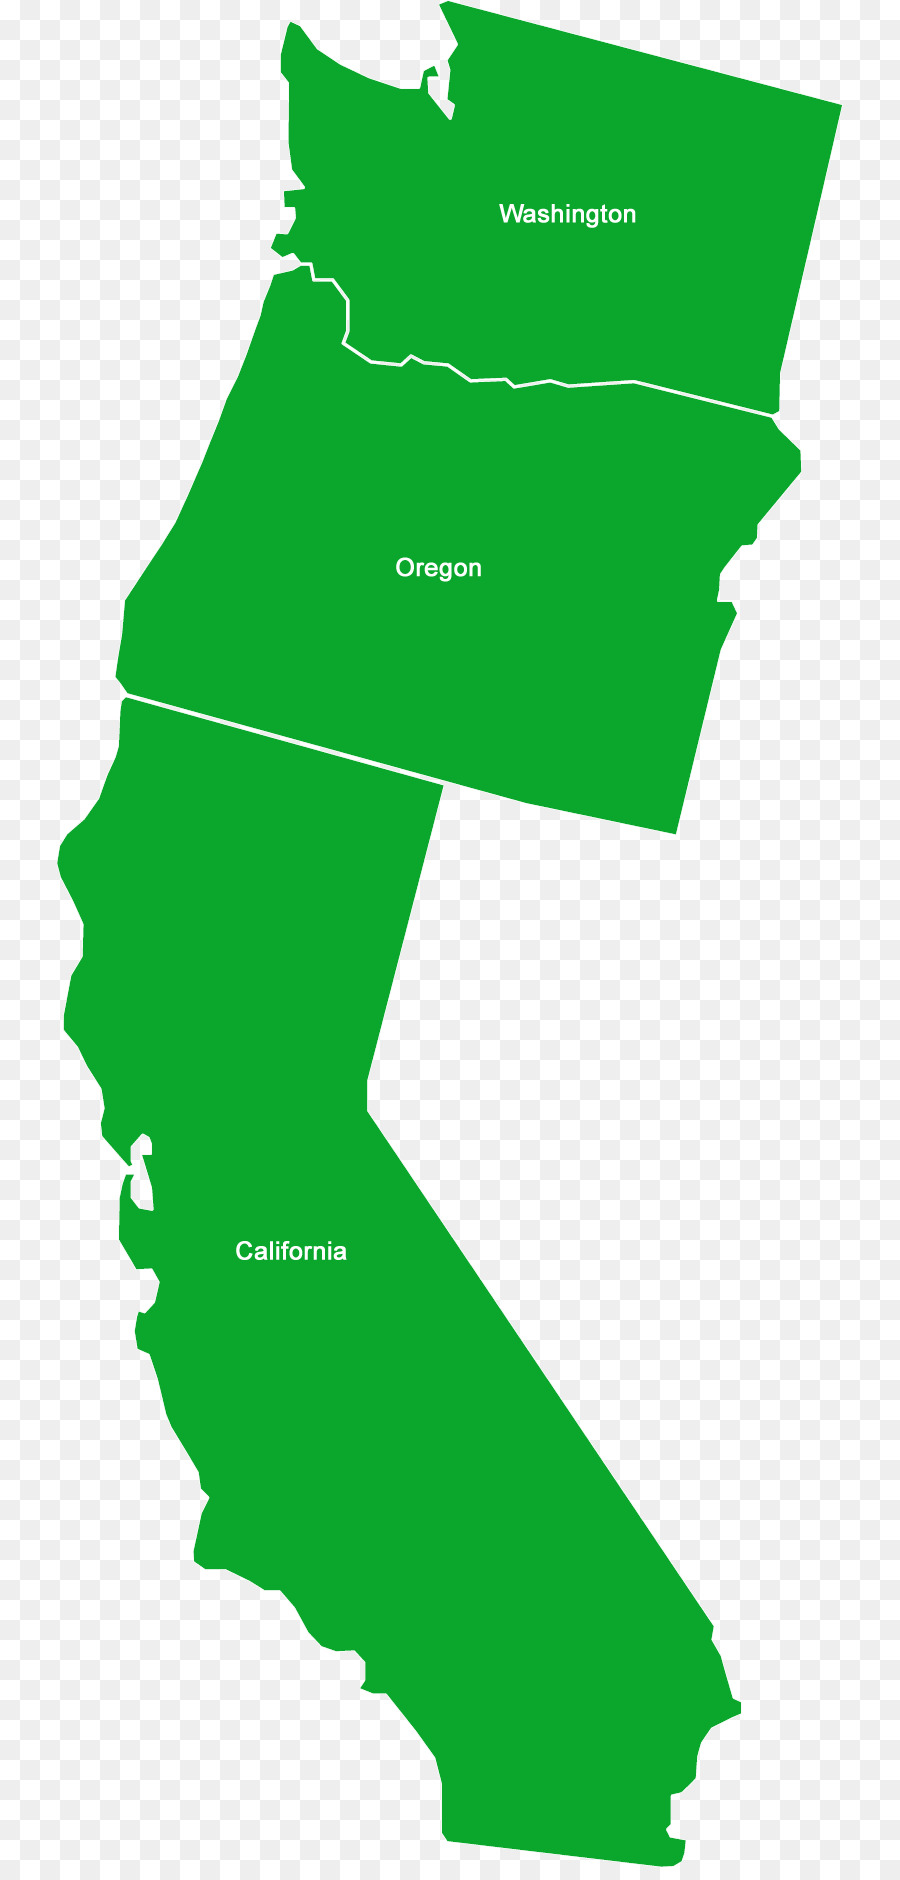 California Washington Oregon Idaho Jefferson - california png download - 786*1867 - Free Transparent California png Download.